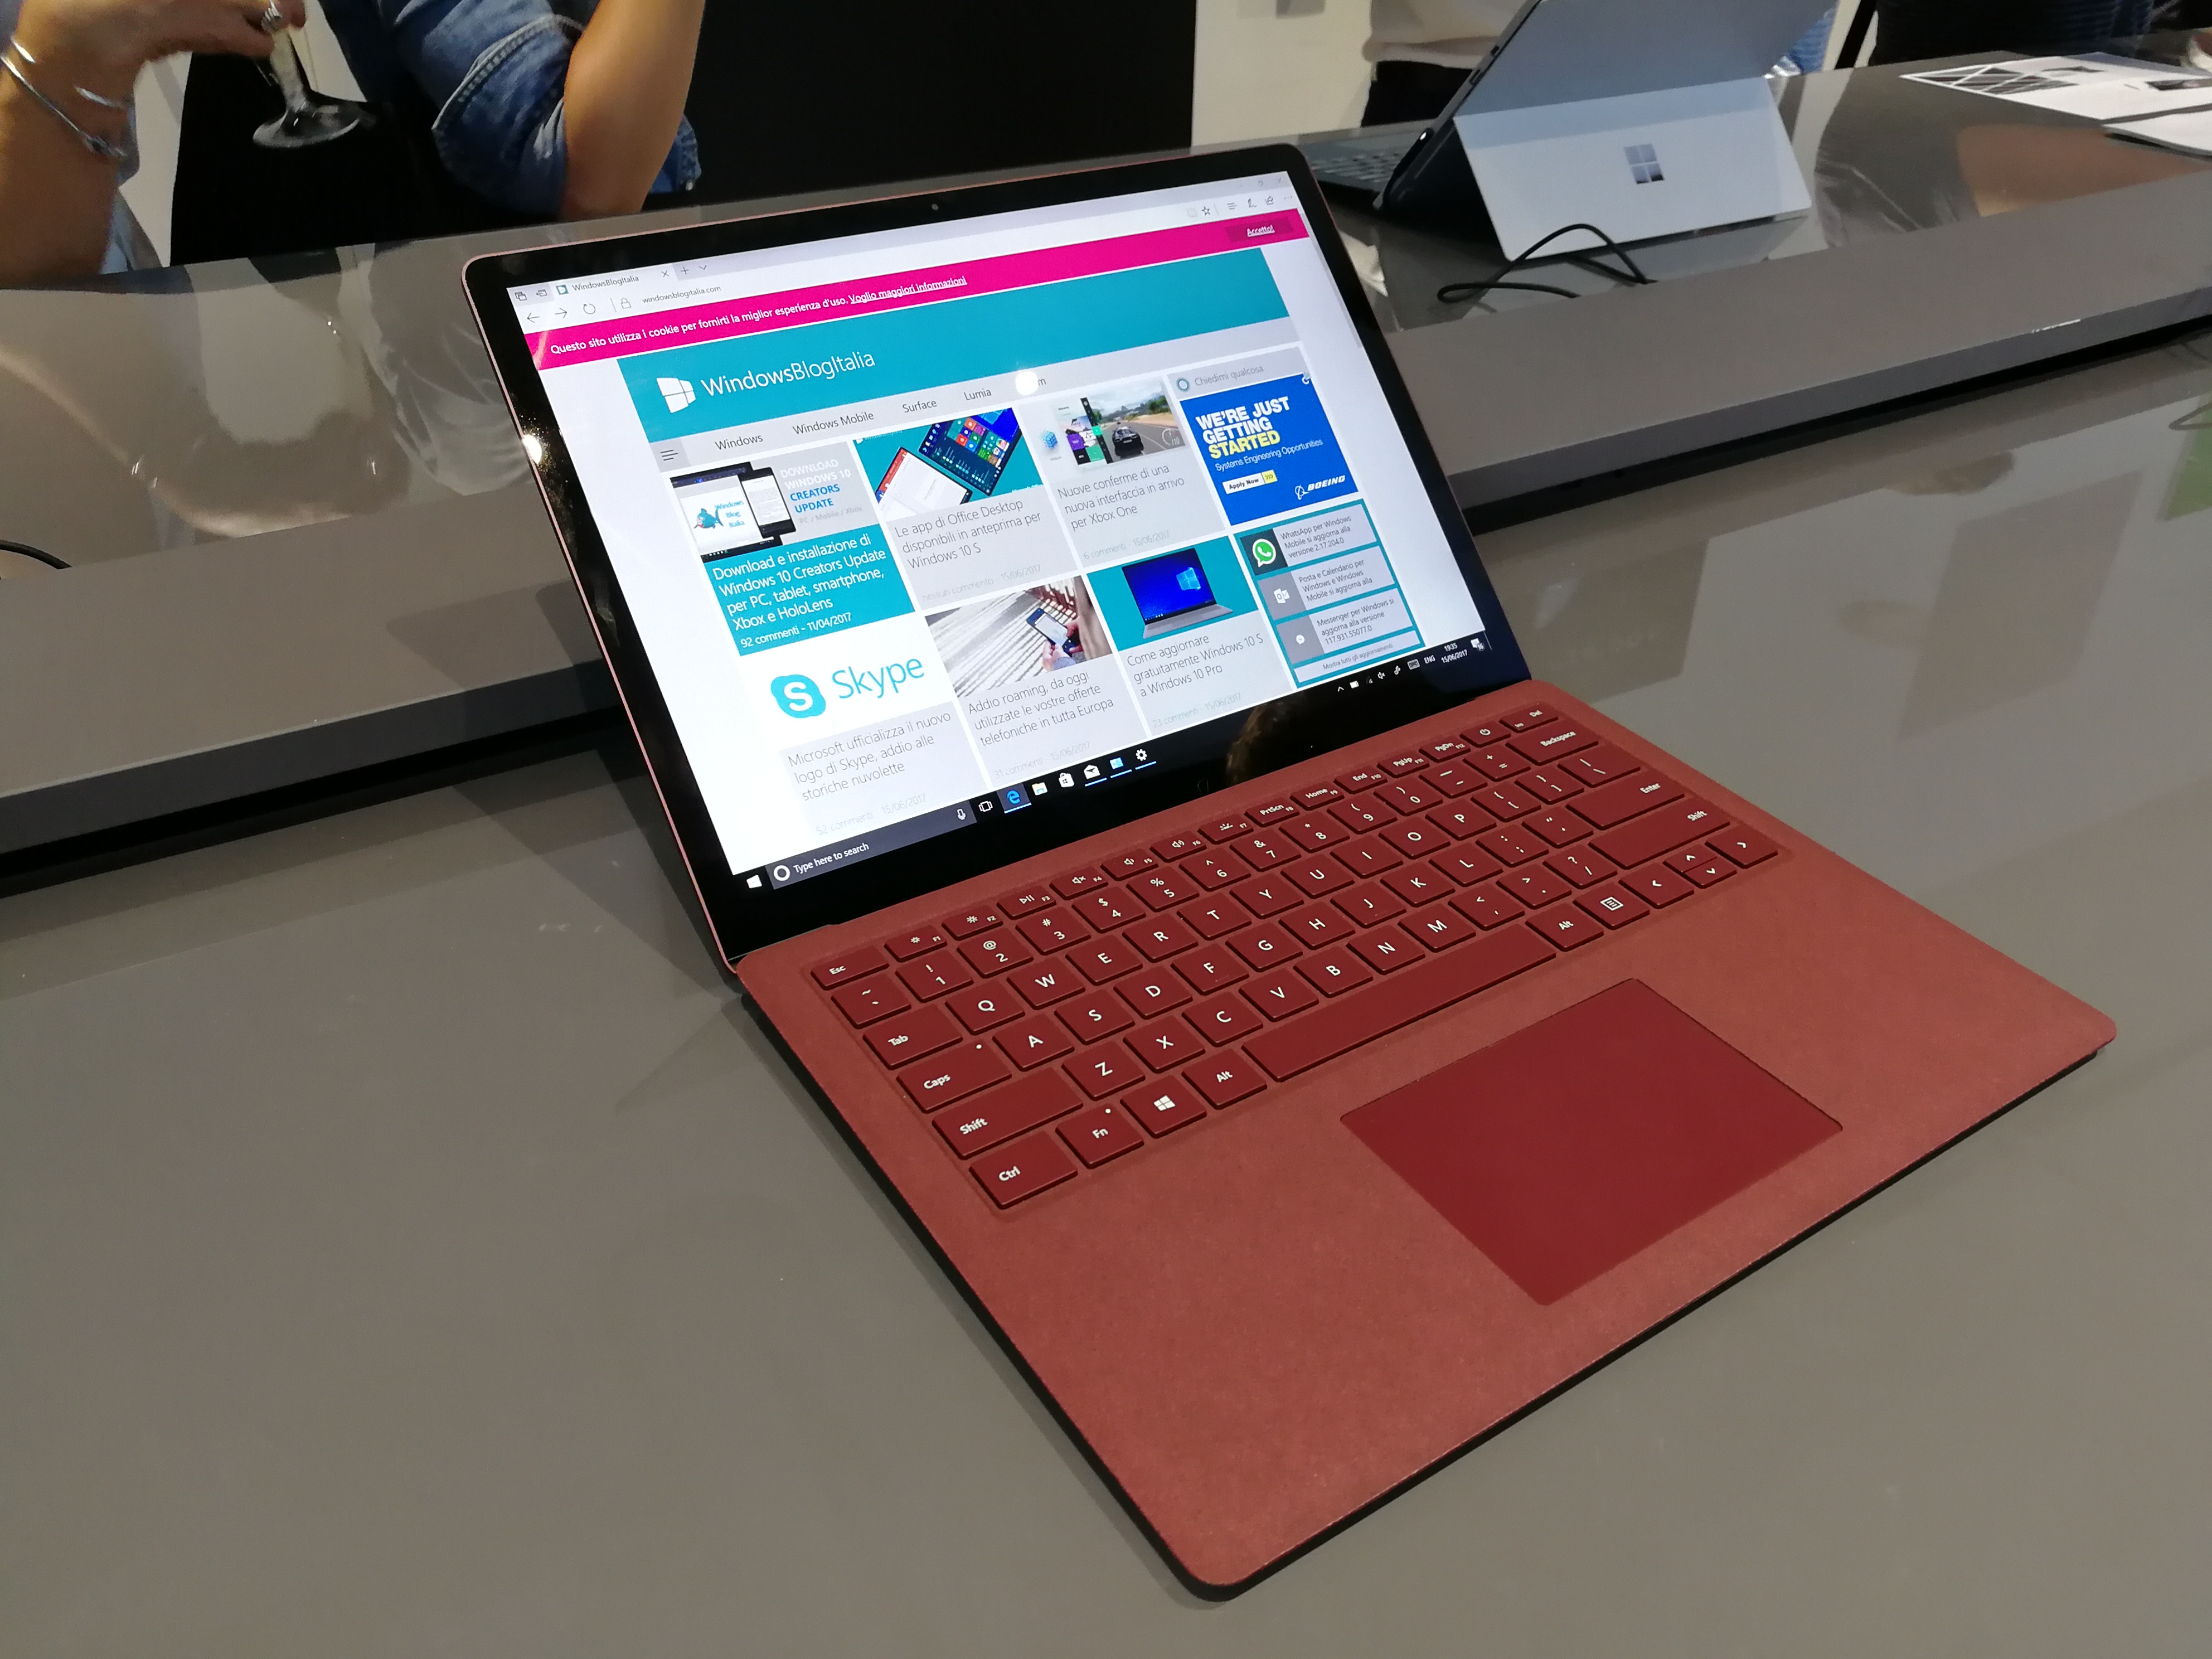 Surface Laptop e Surface Pro 8/128GB in offerta su Amazon a 699€ e 899€